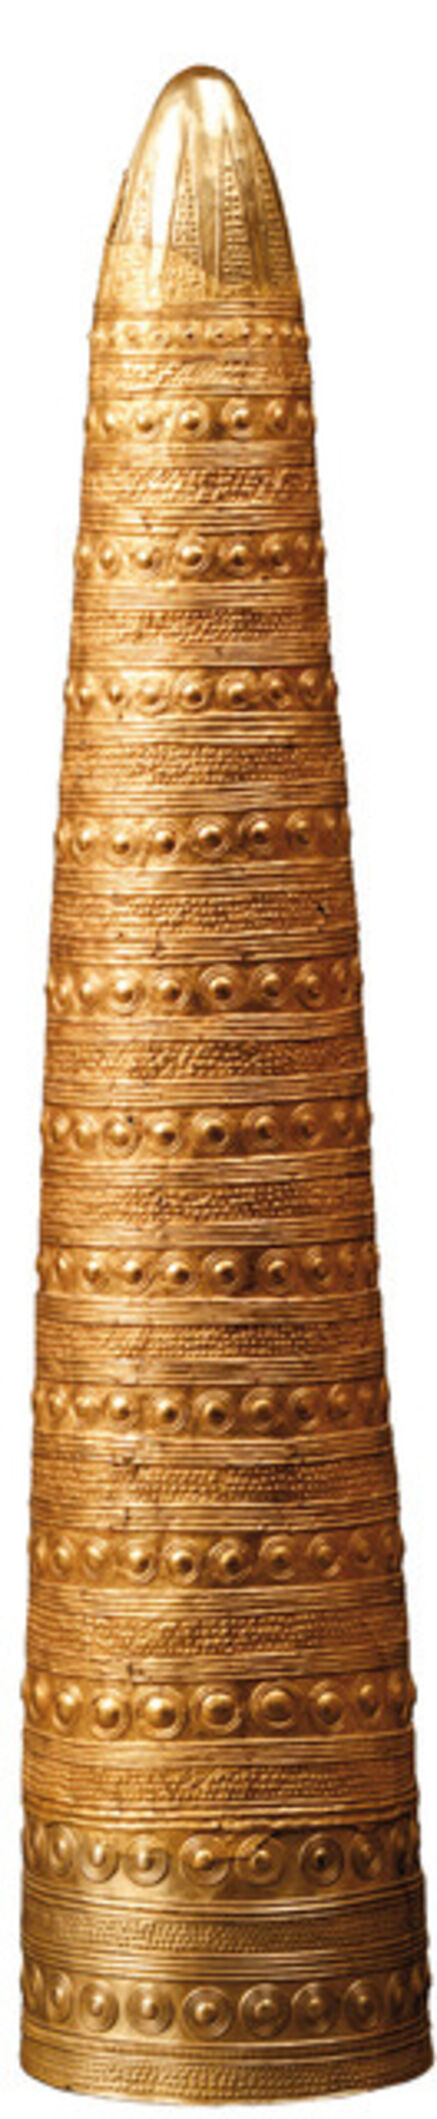 ‘Cône (Cone)’, 1500-1200 BC